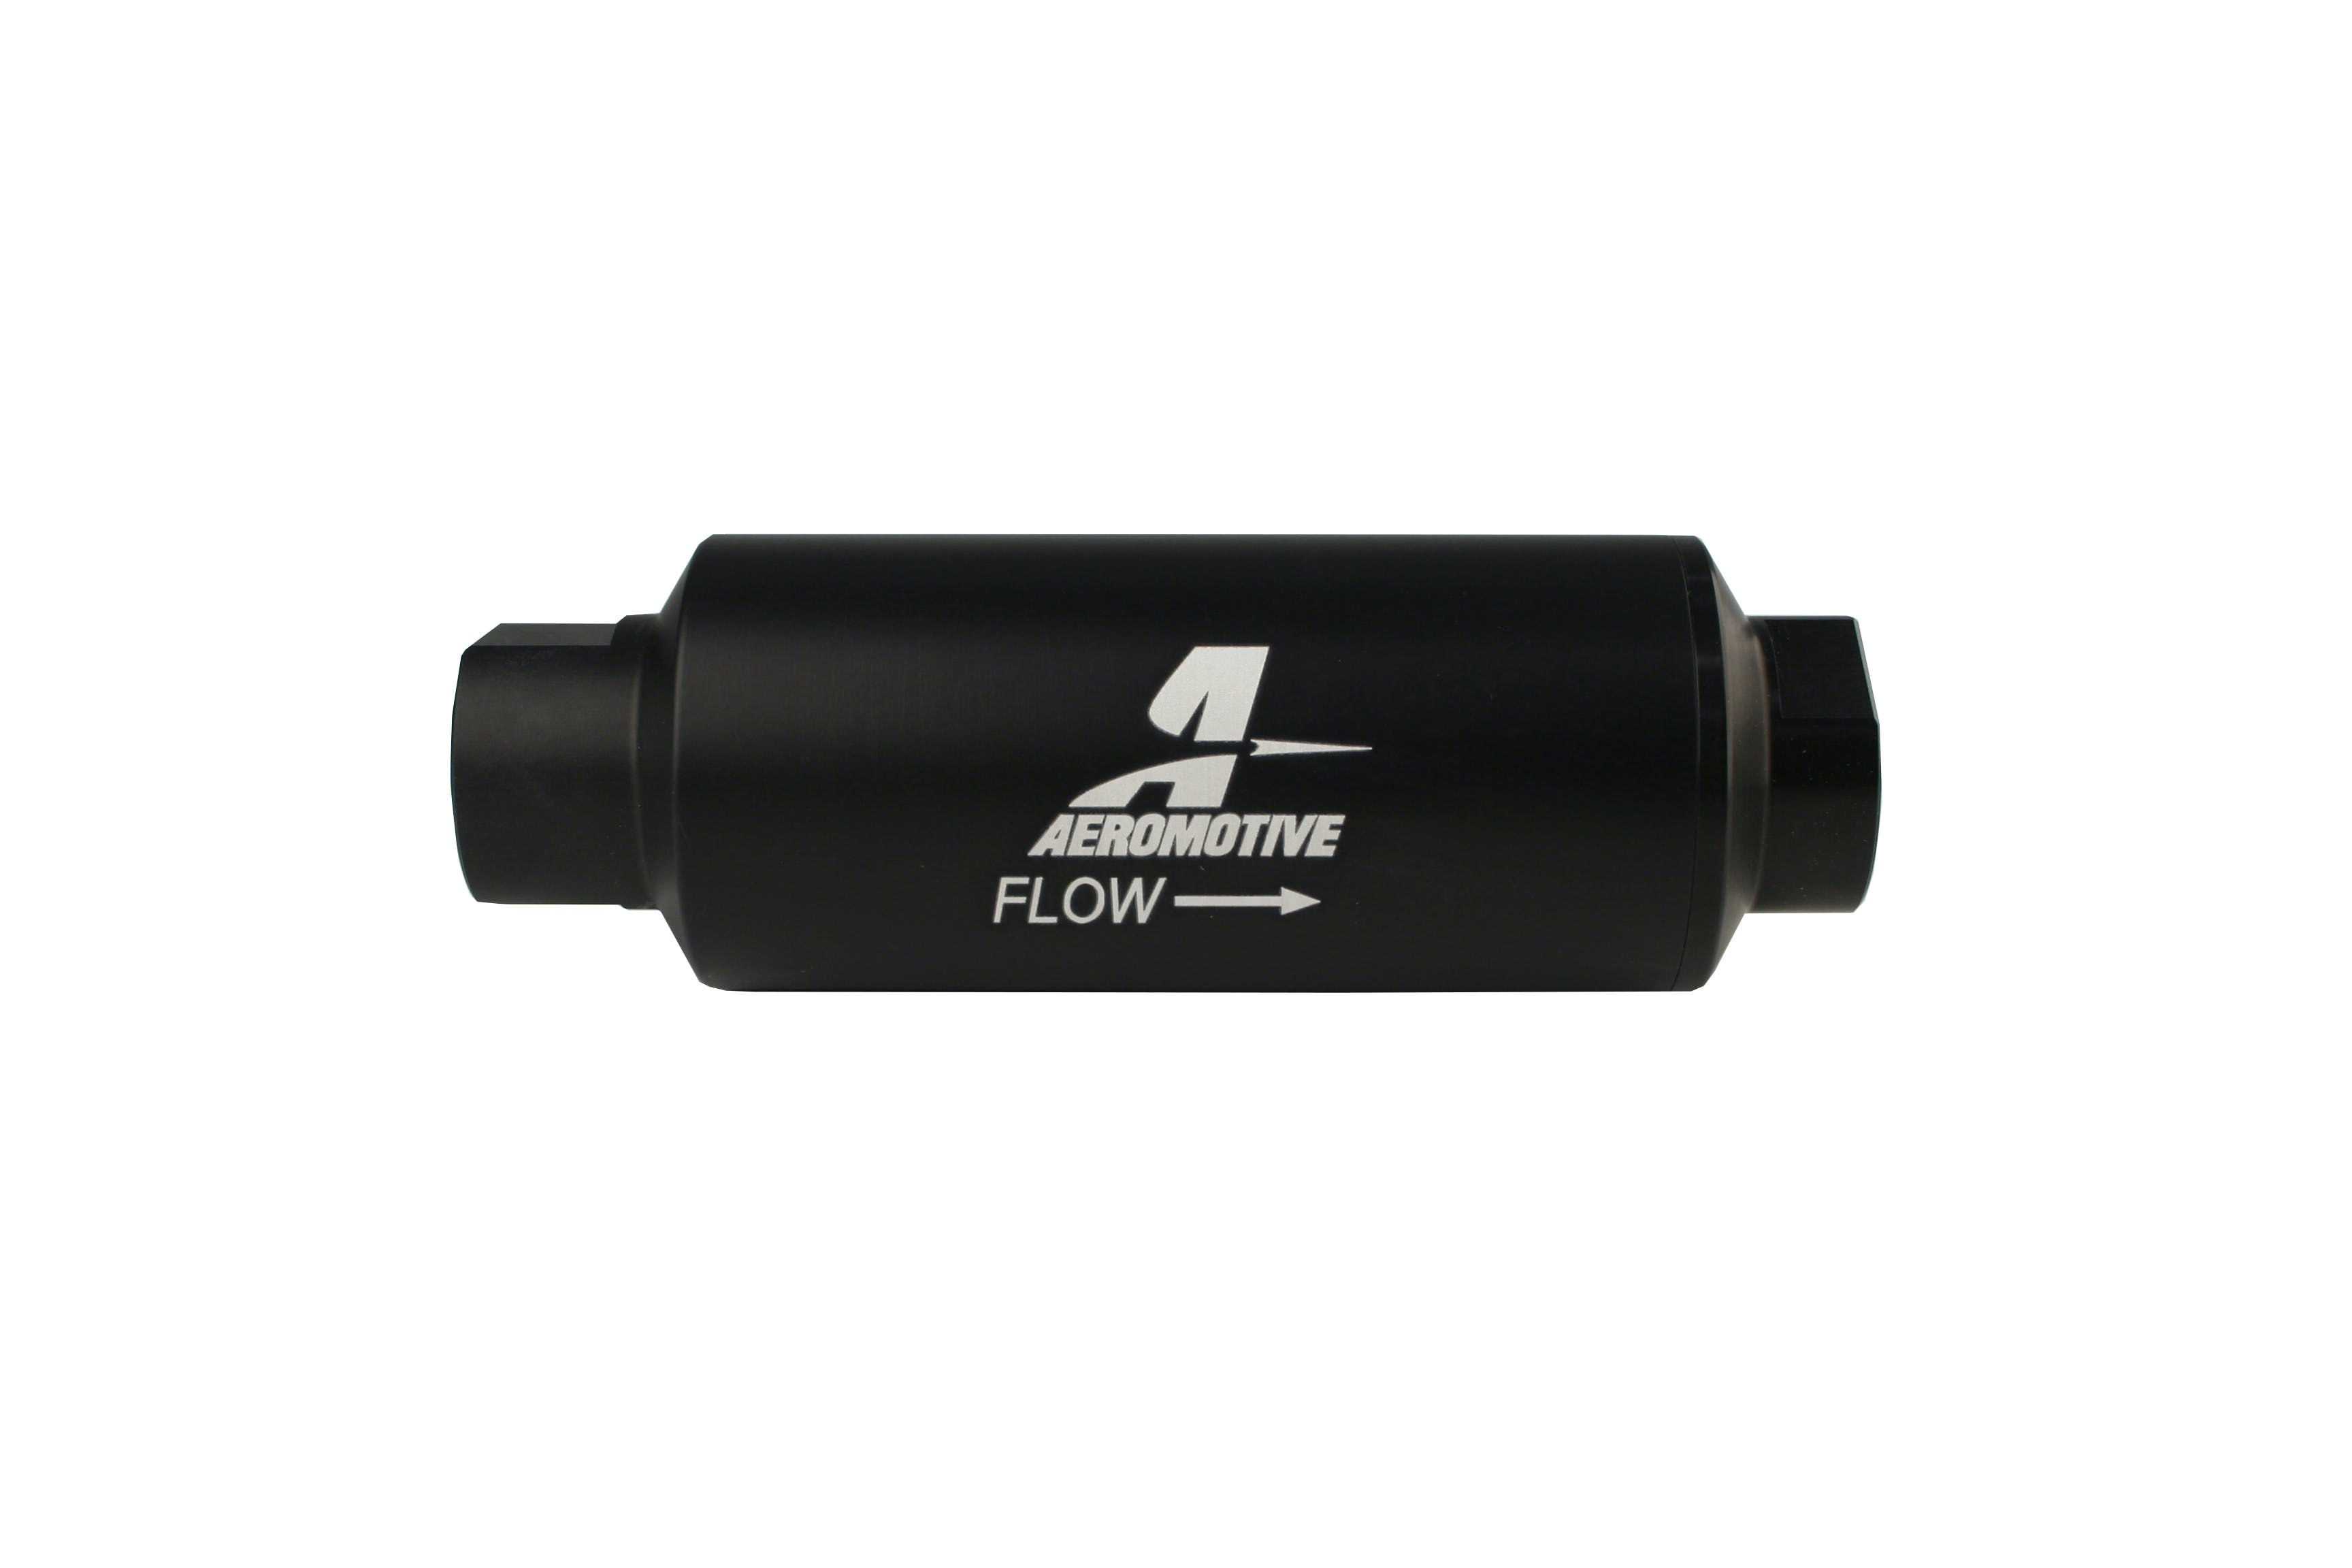 Aeromotive Fuel System 12311 Marine AN-12 10-micron Fuel Filter